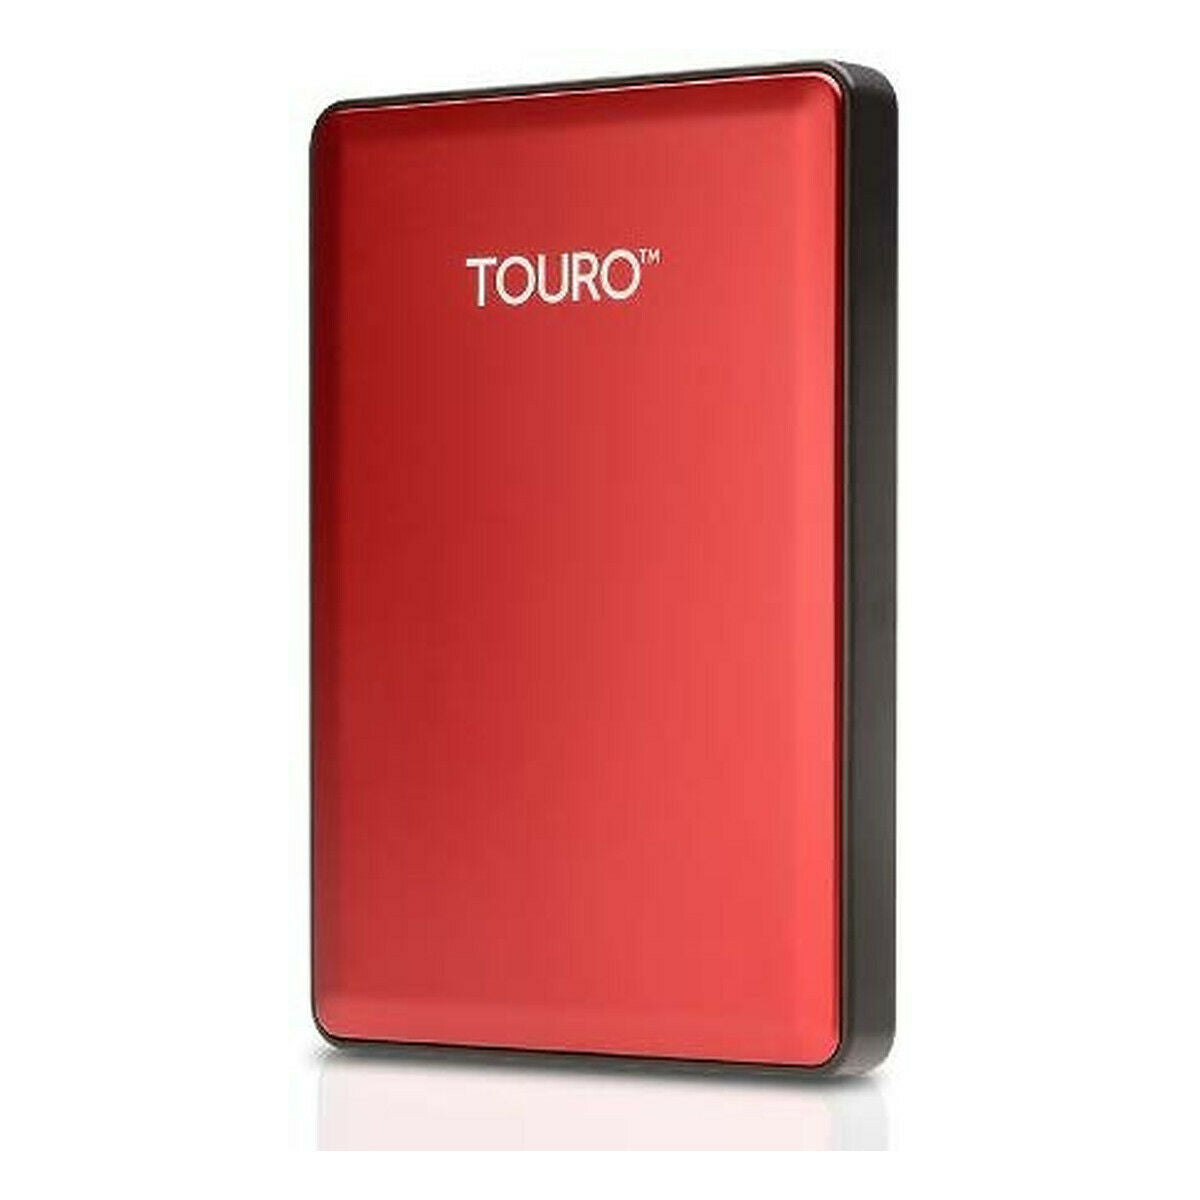 Touro S Portable External Hard Drive 500GB USB 3.0 for PC, Mac, Laptop - 0S03784